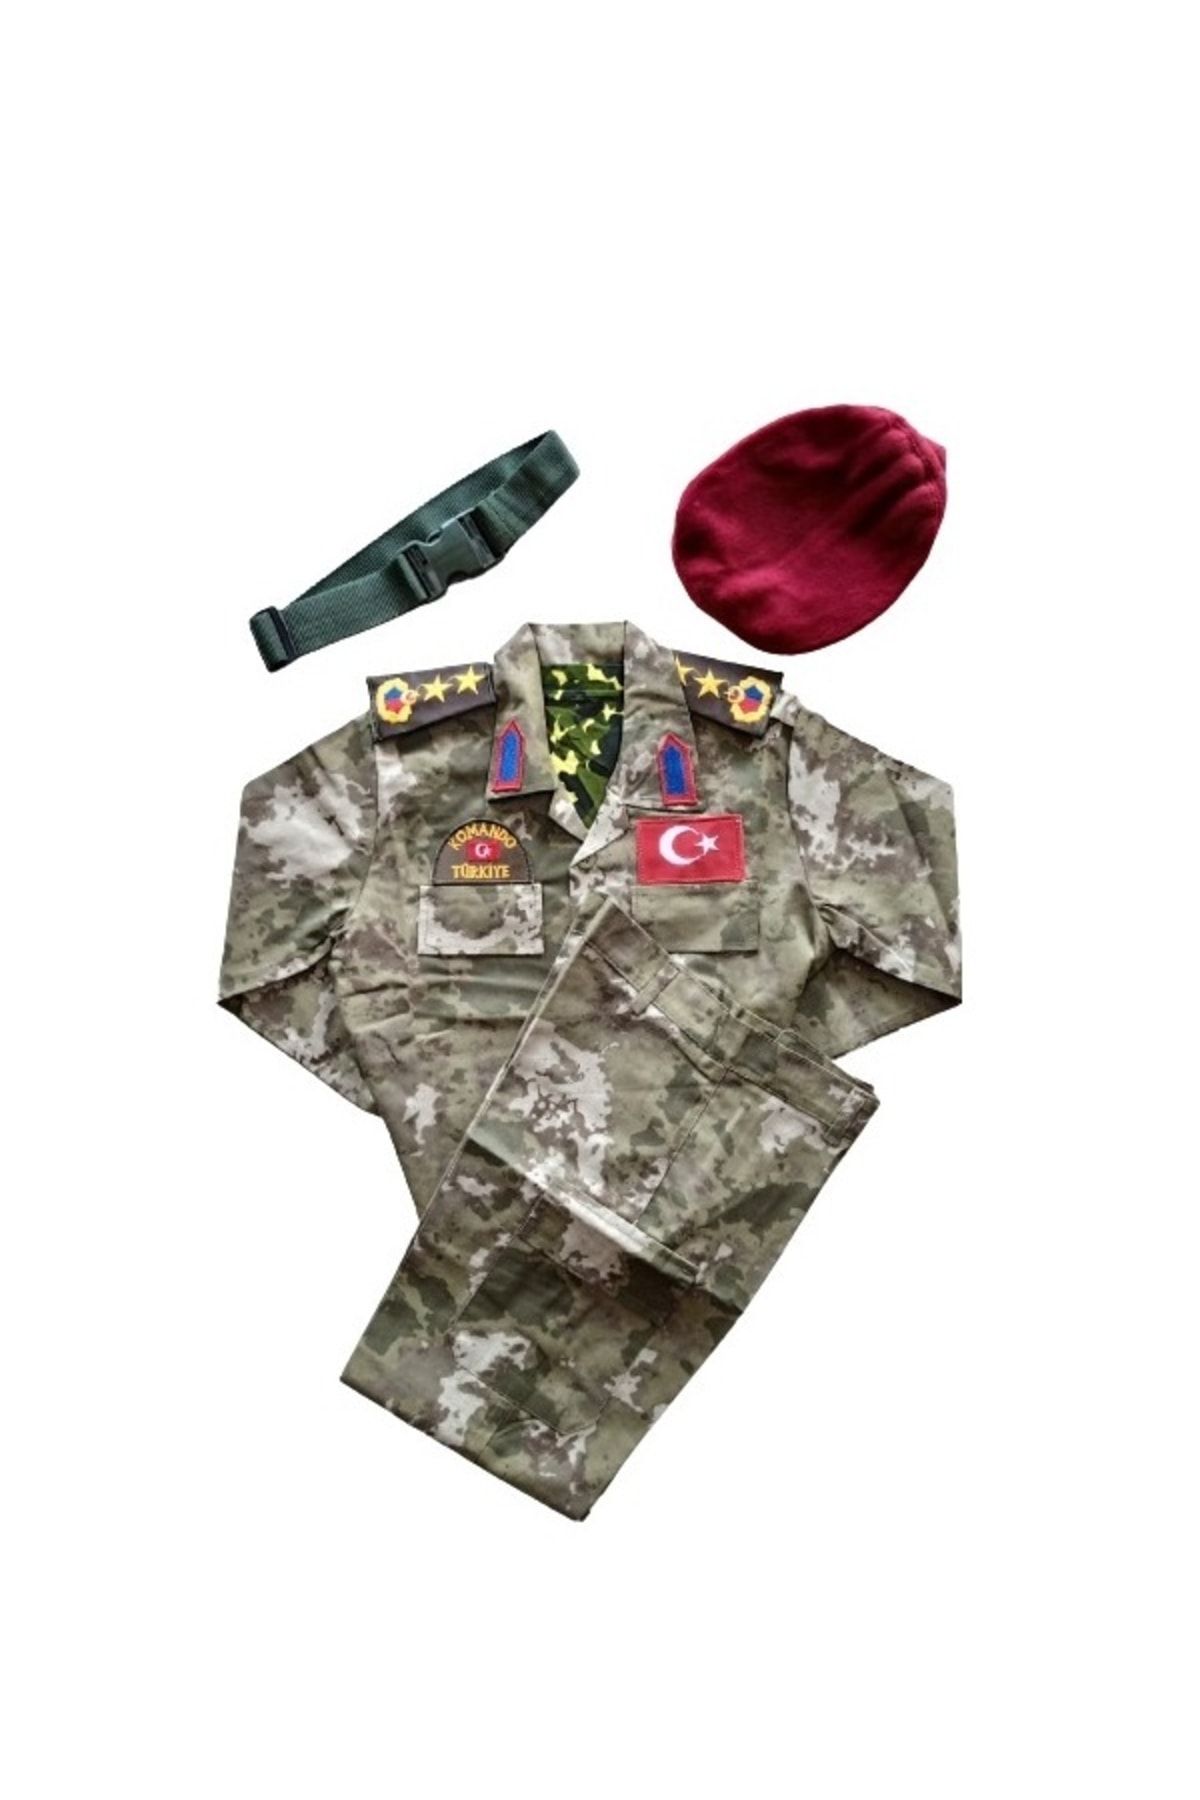 Temiz Pazar Erkek Çocuk Asker Komando Kostüm Kıyafeti Palaska Bere